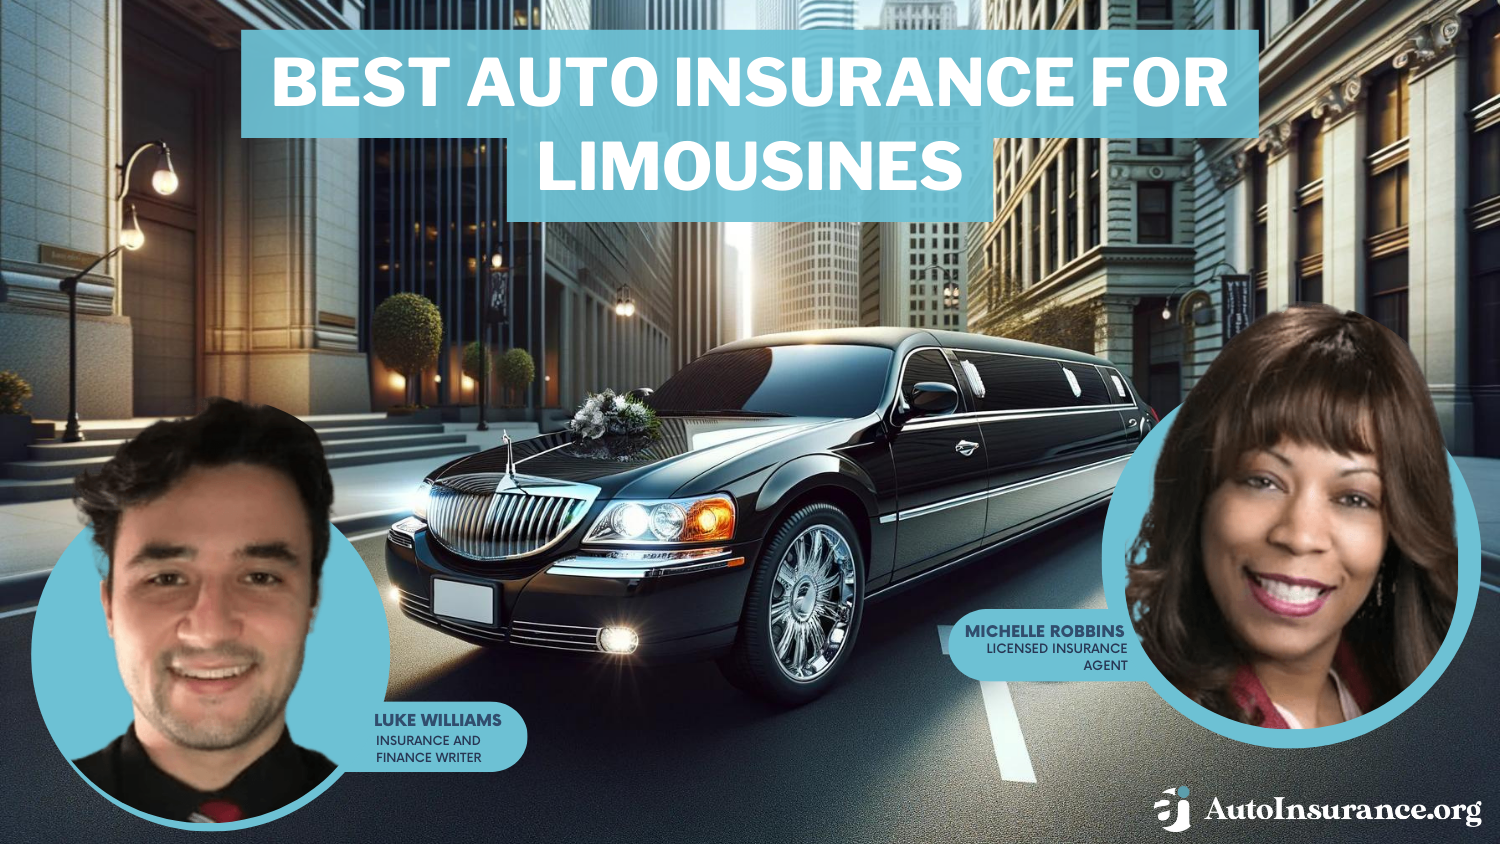 Best Auto Insurance for Limousines: Progressive, State Farm, Geico